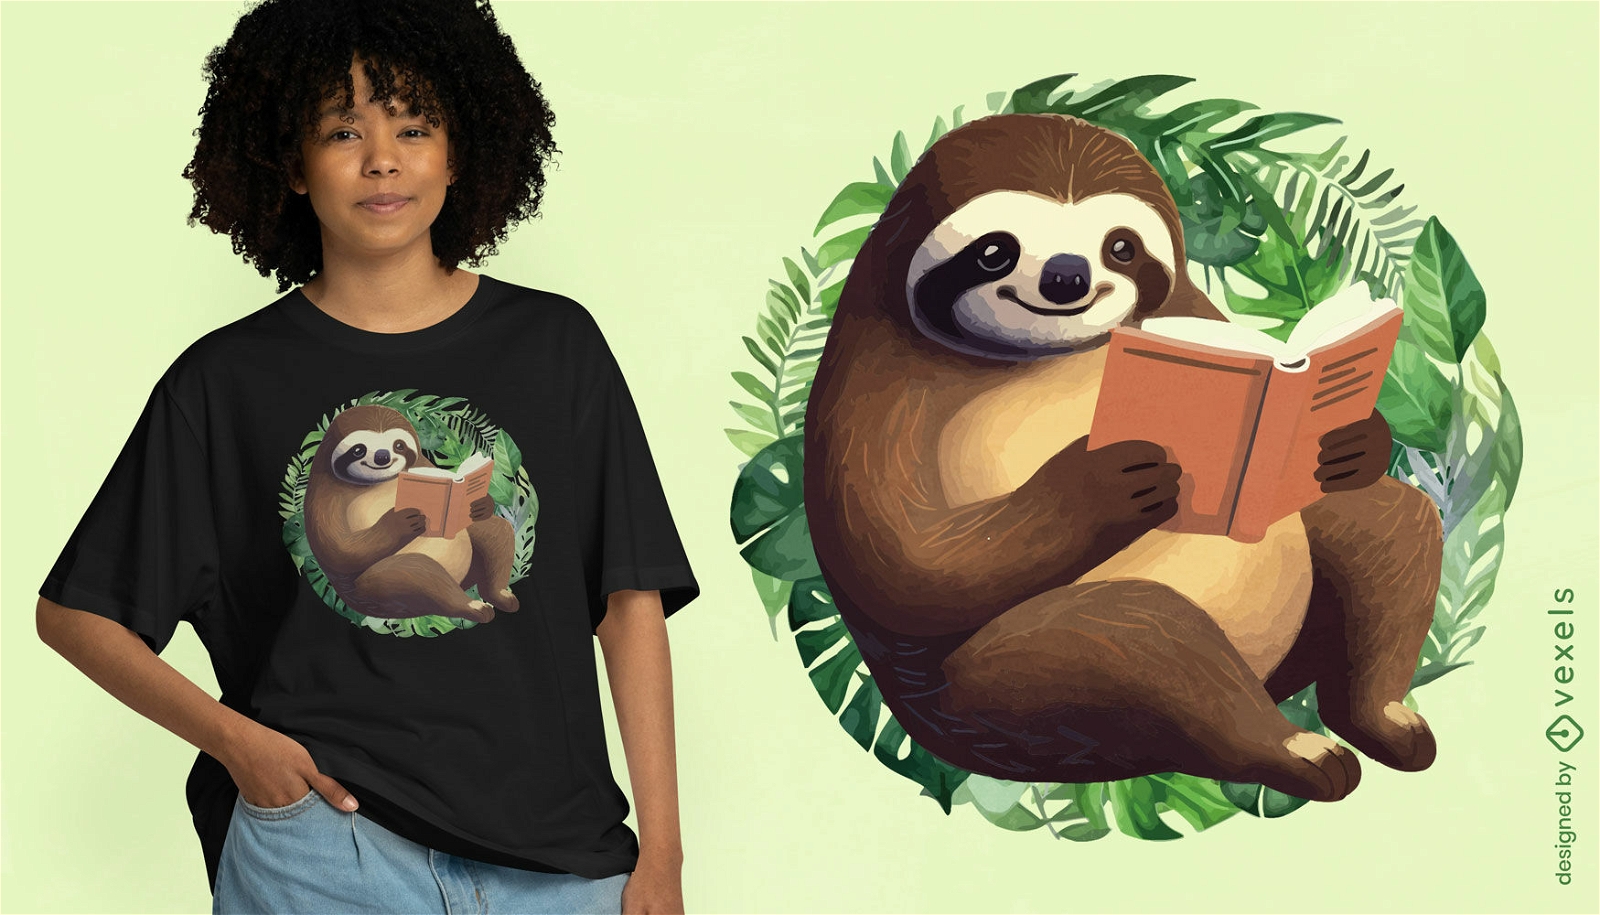 Sloth reading t-shirt design